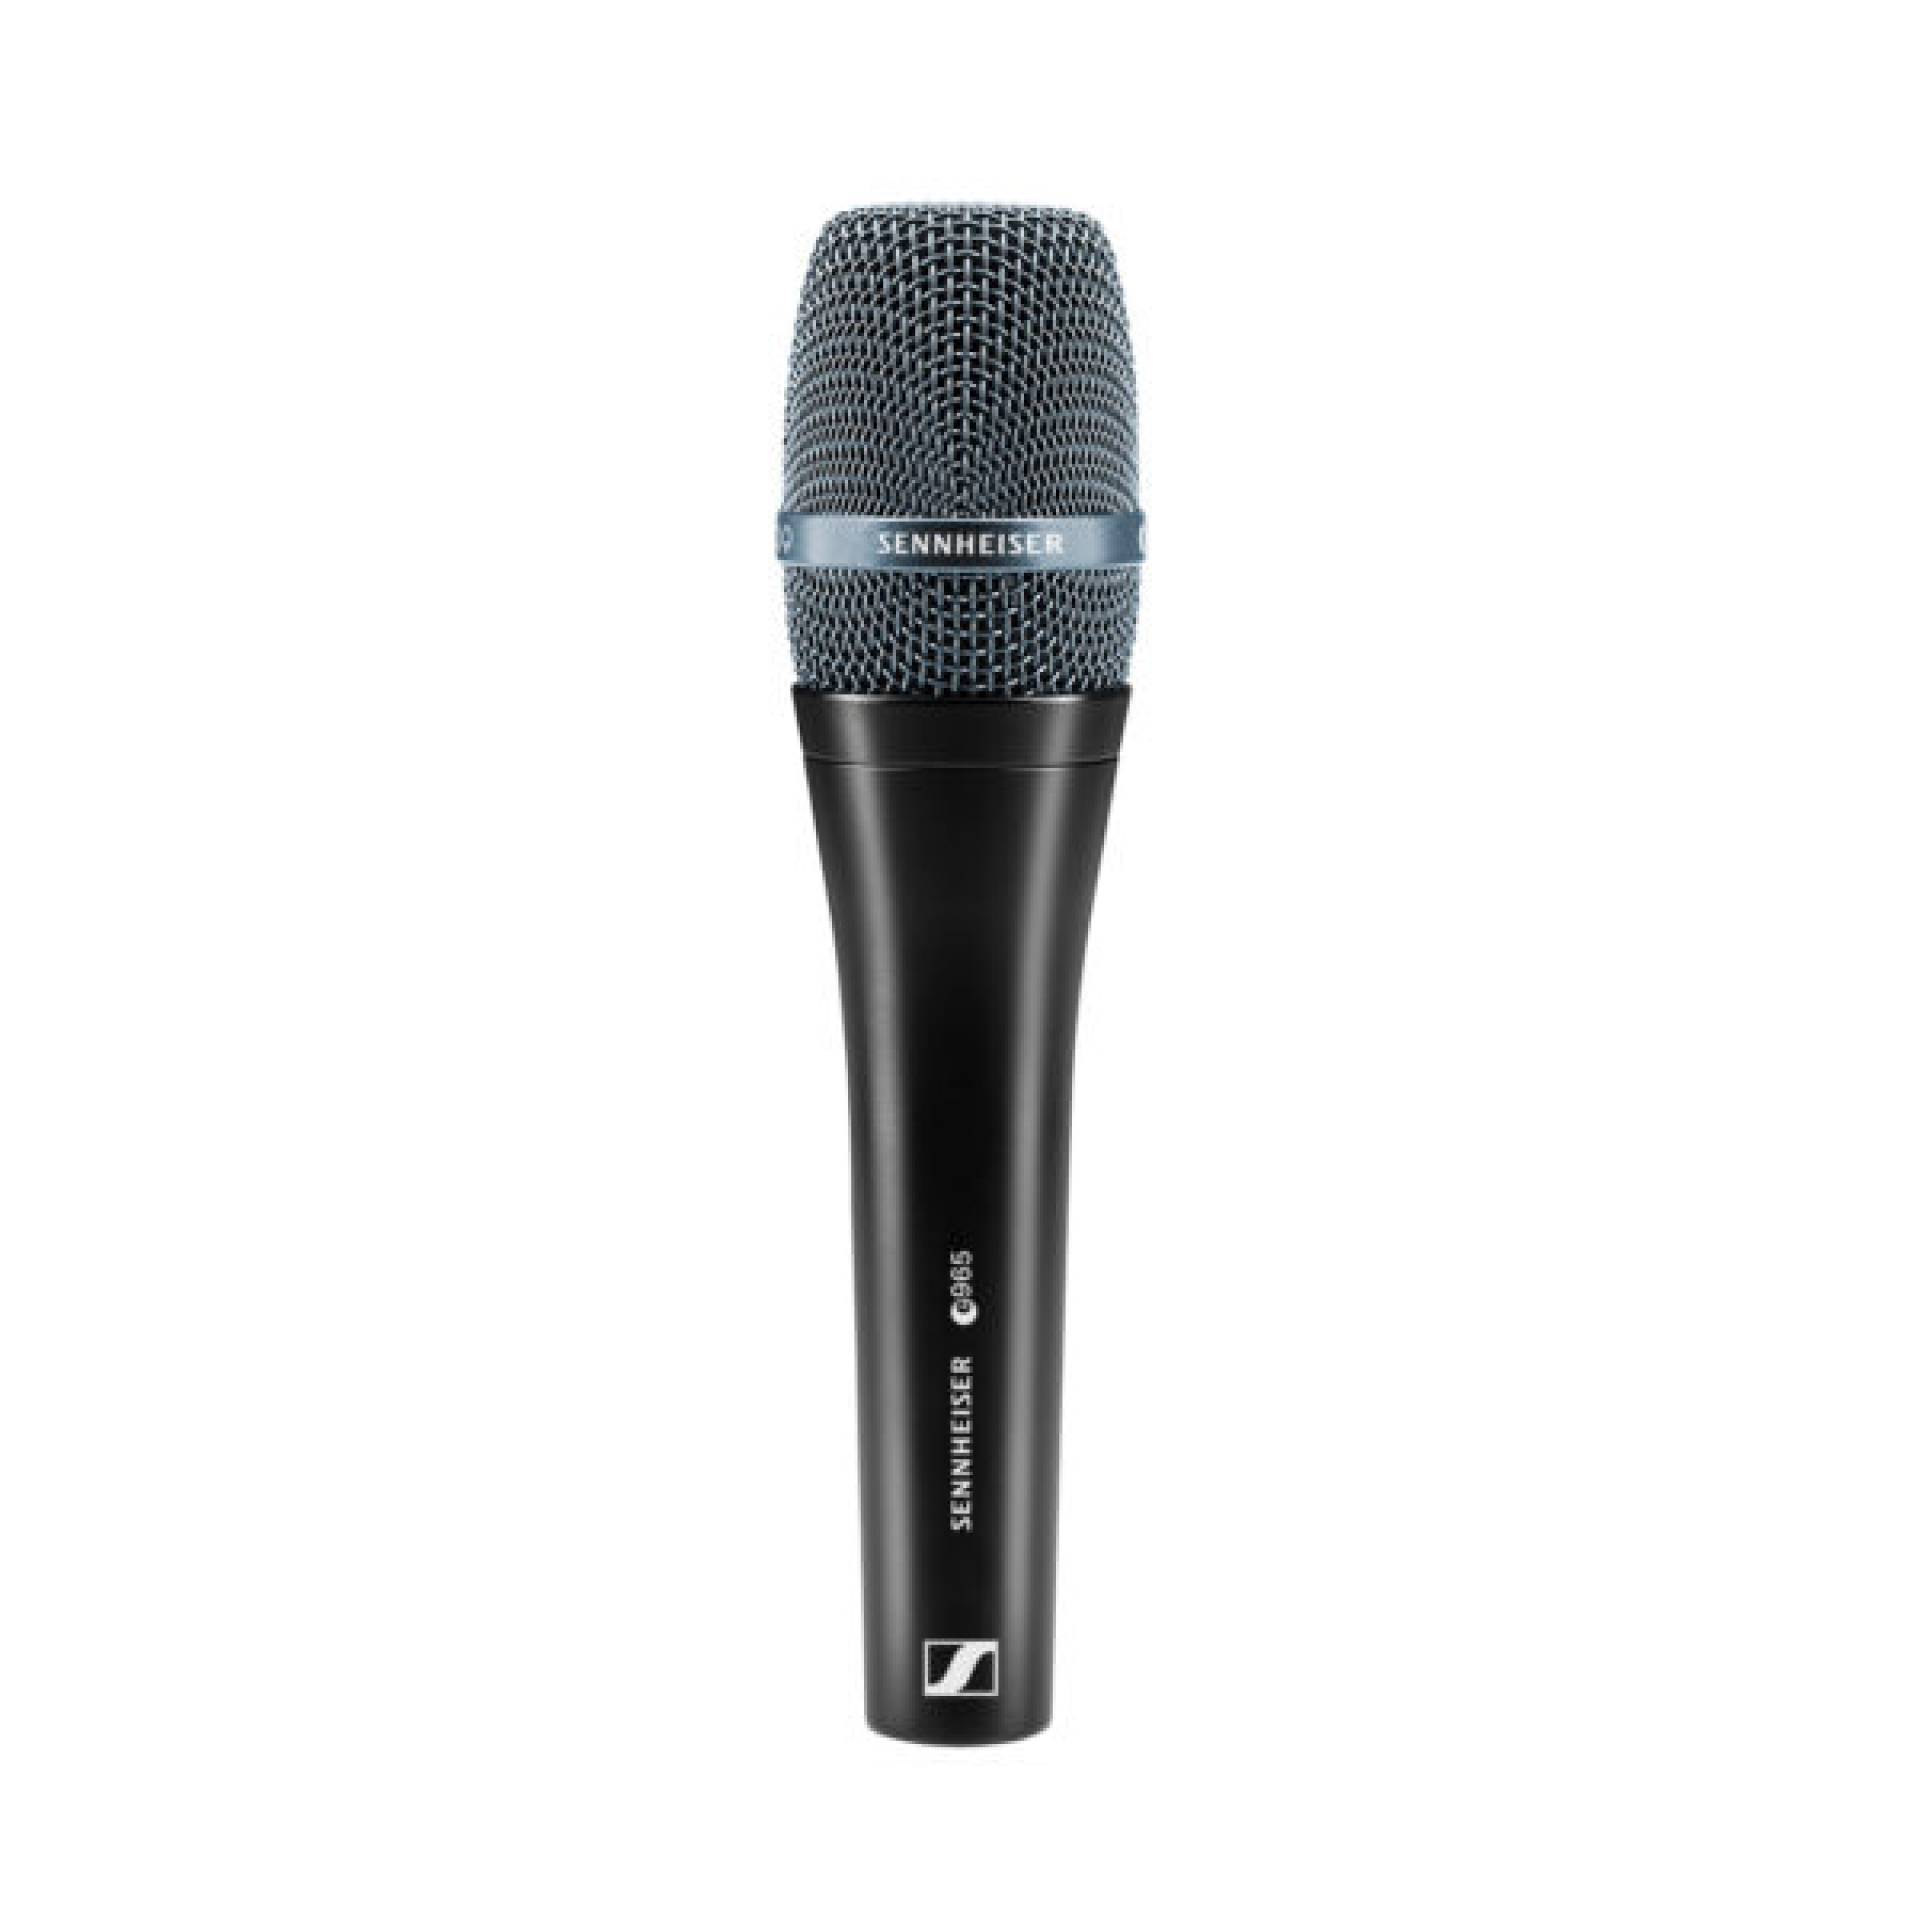 Sennheiser evolution wired microphones - e965